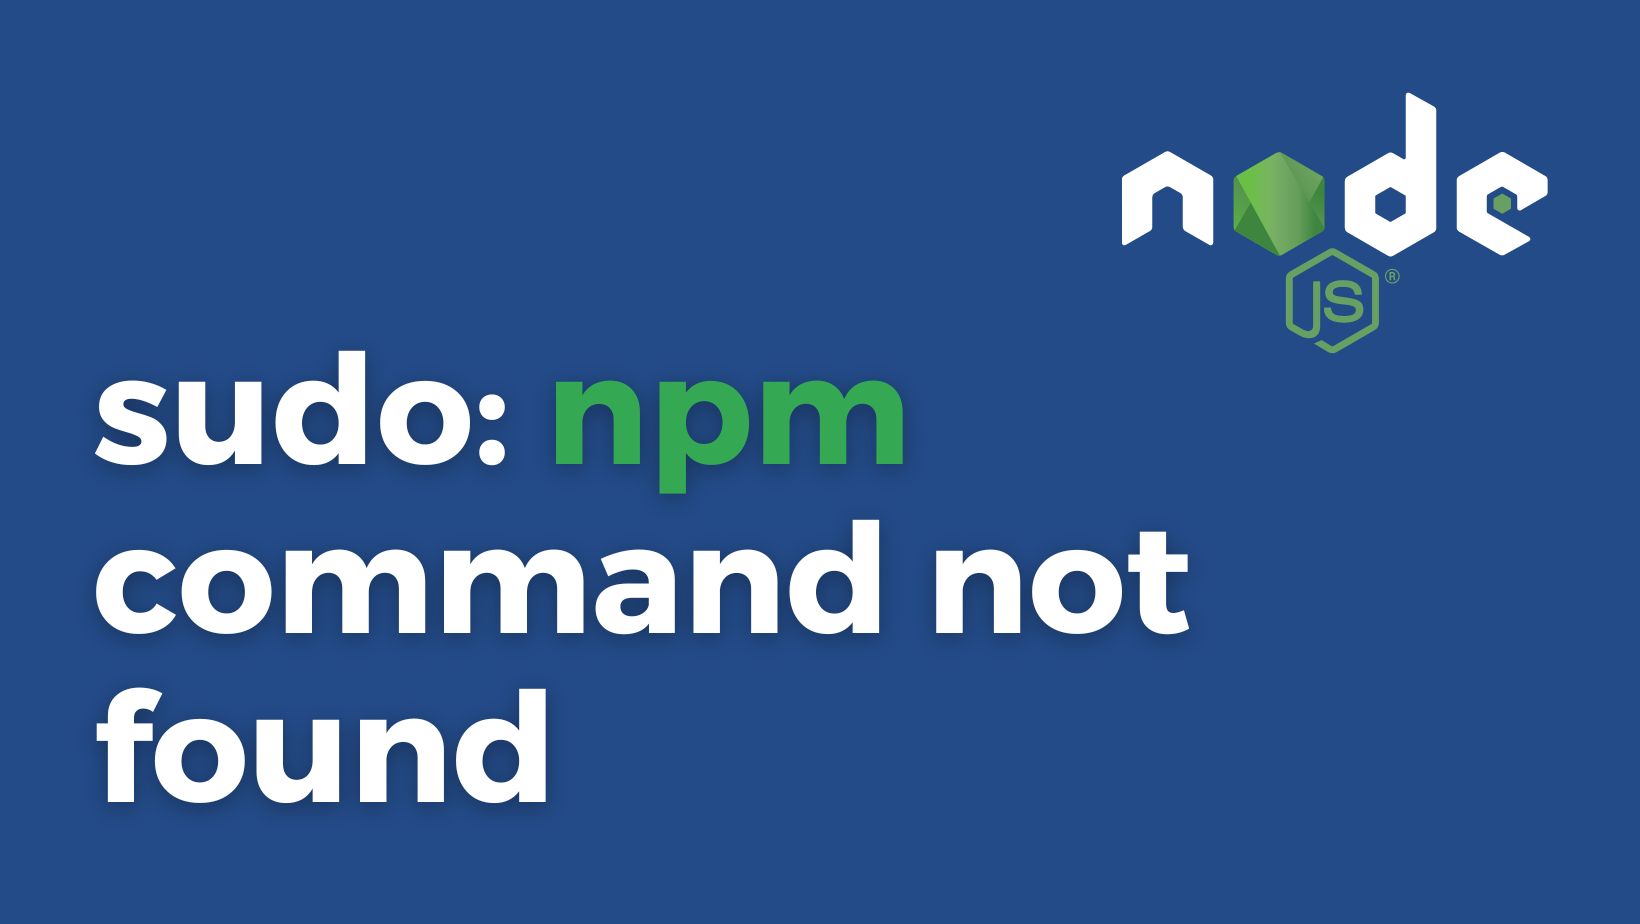 sudo: npm: command not found